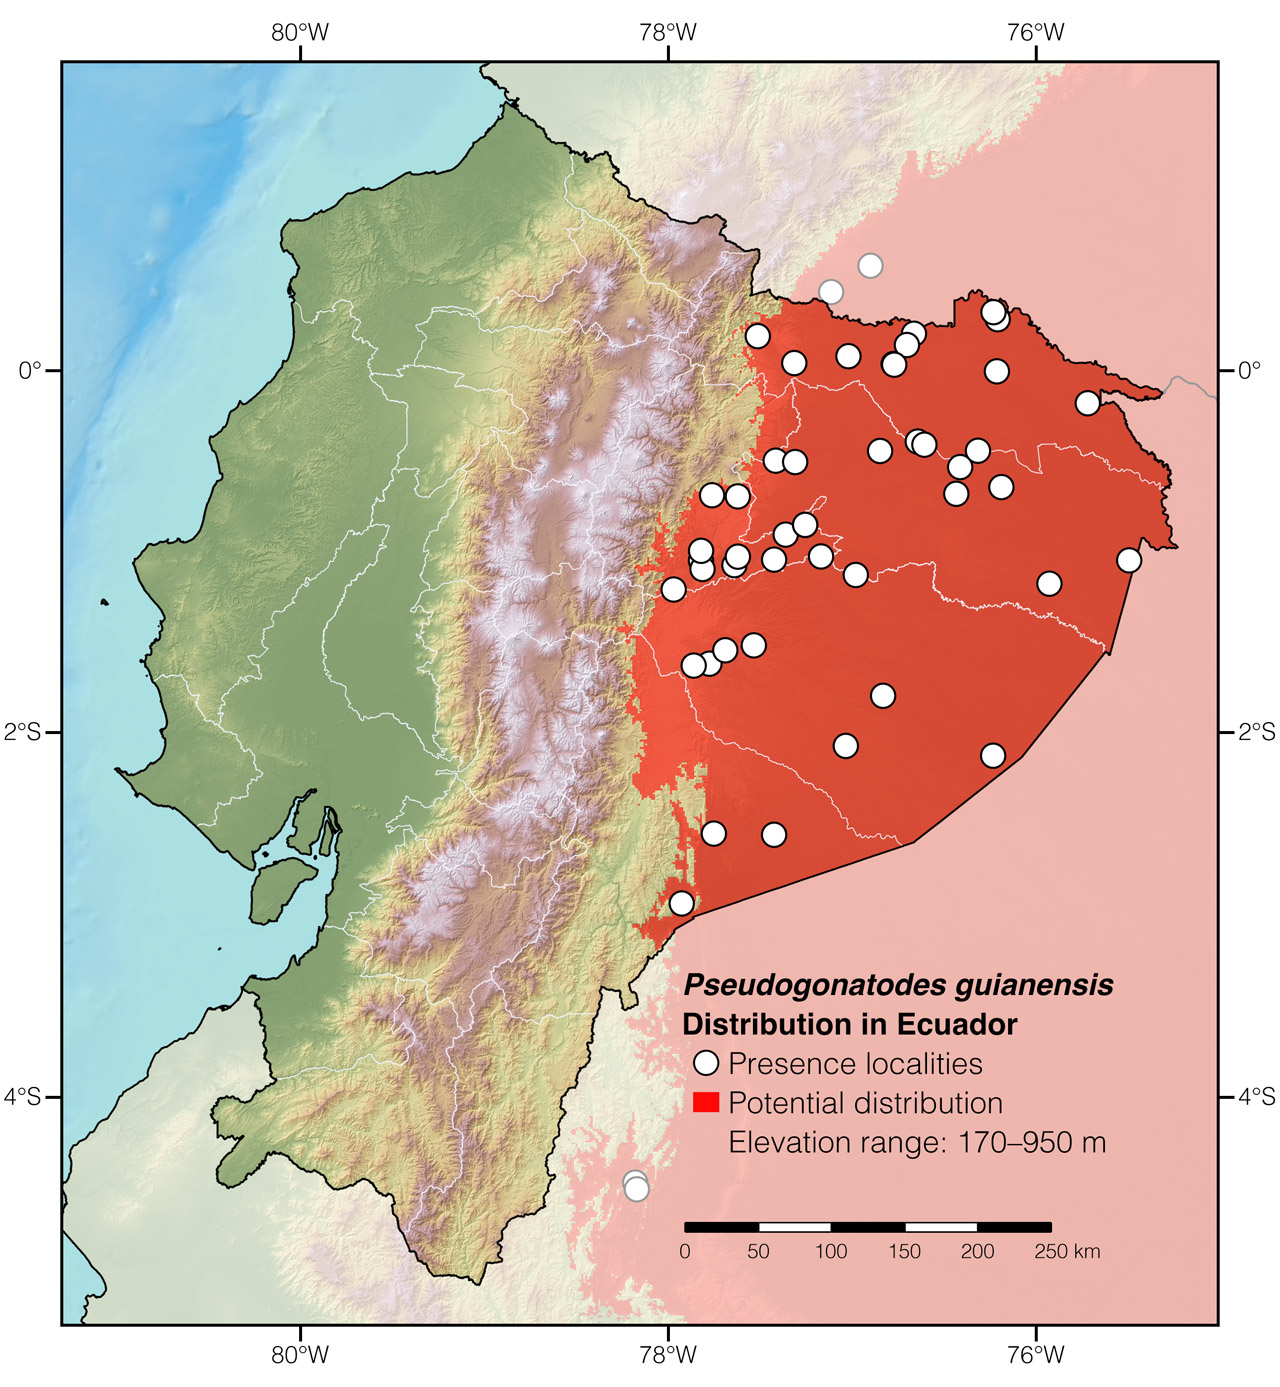 Distribution of Pseudogonatodes guianensis in Ecuador